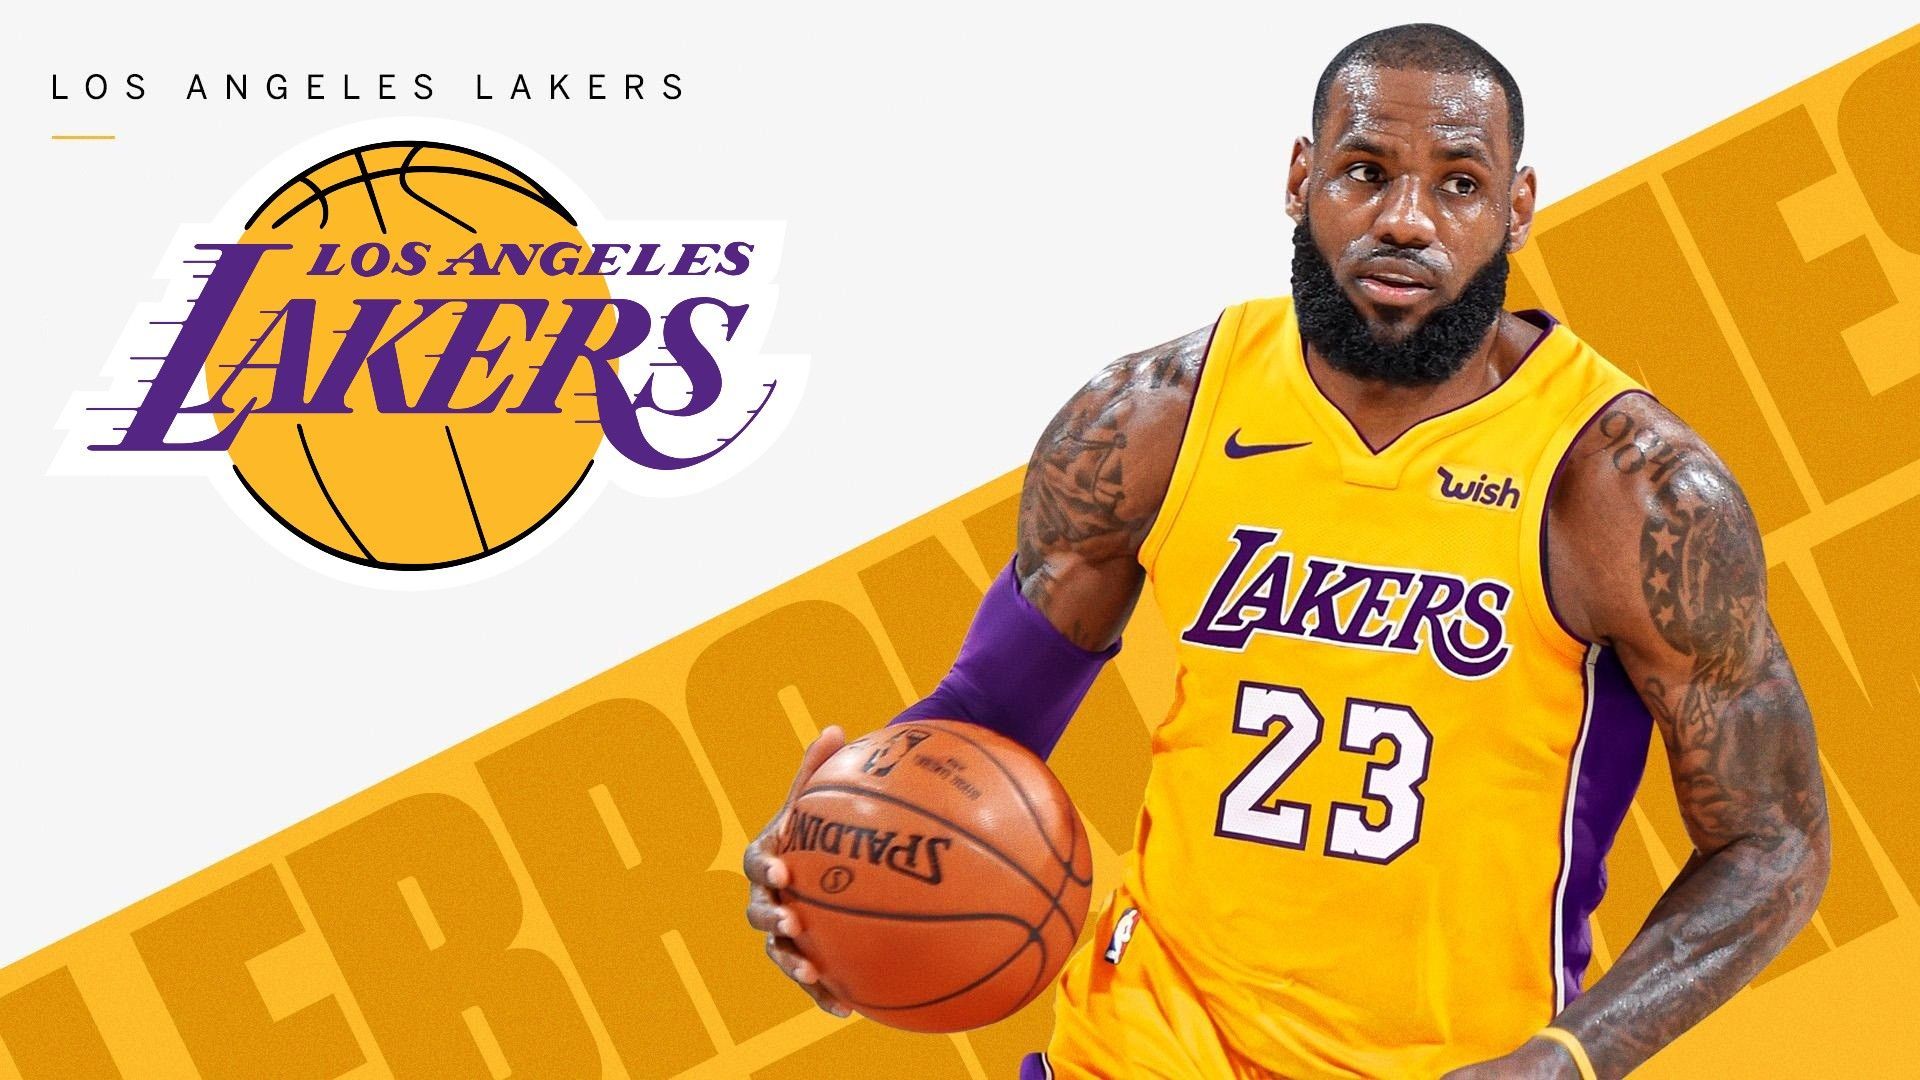 LEBRON JAMES LAKERS WALLPAPER HD. Lebron james lakers, Lebron james, Lakers wallpaper